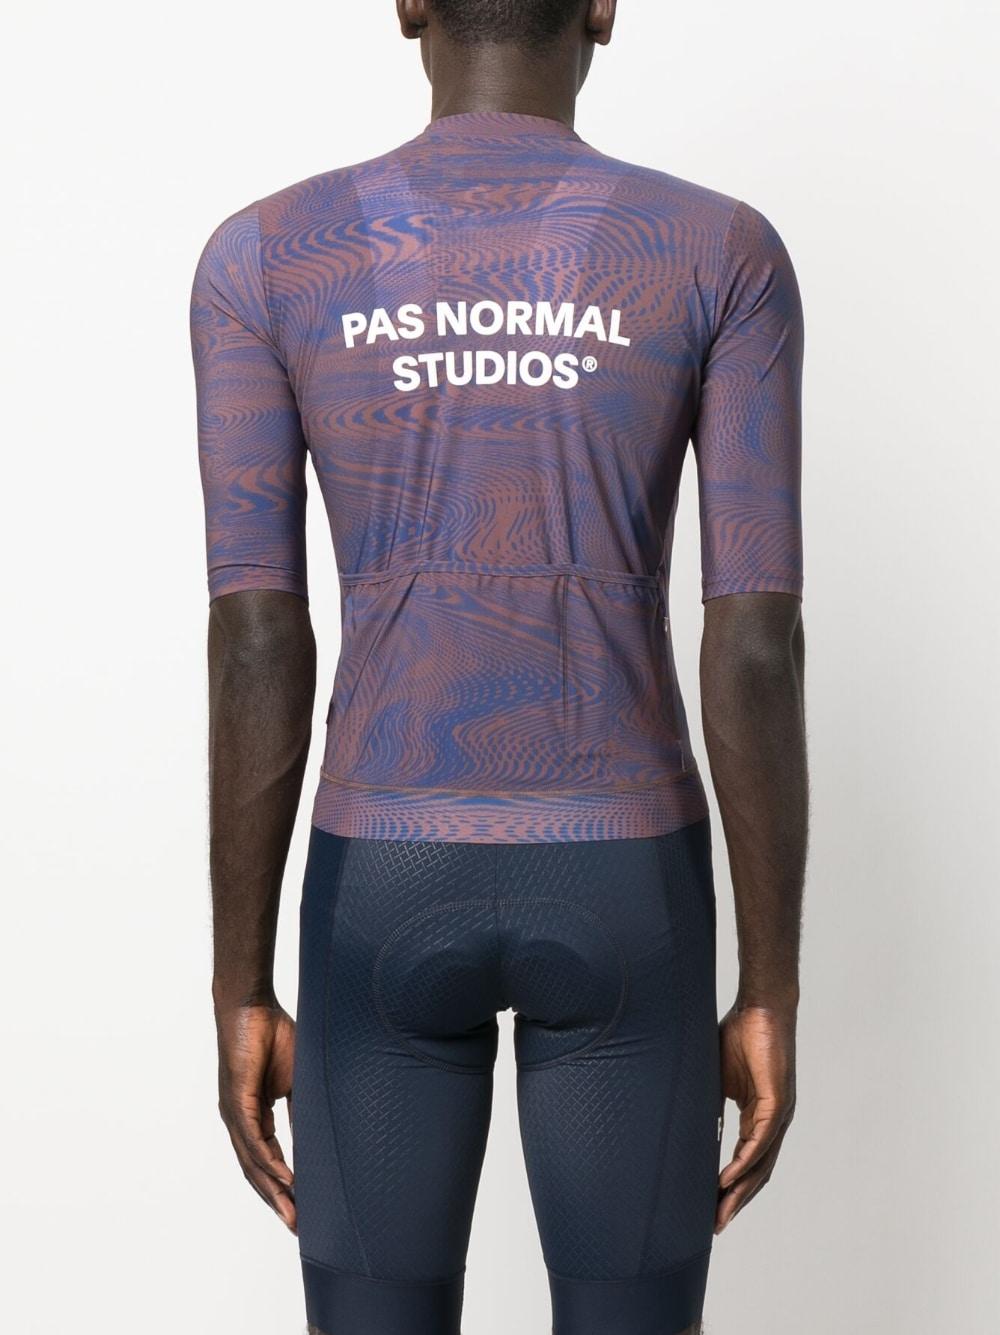 Pas Normal Studios Mechanism Cycling Jersey in Purple for Men 